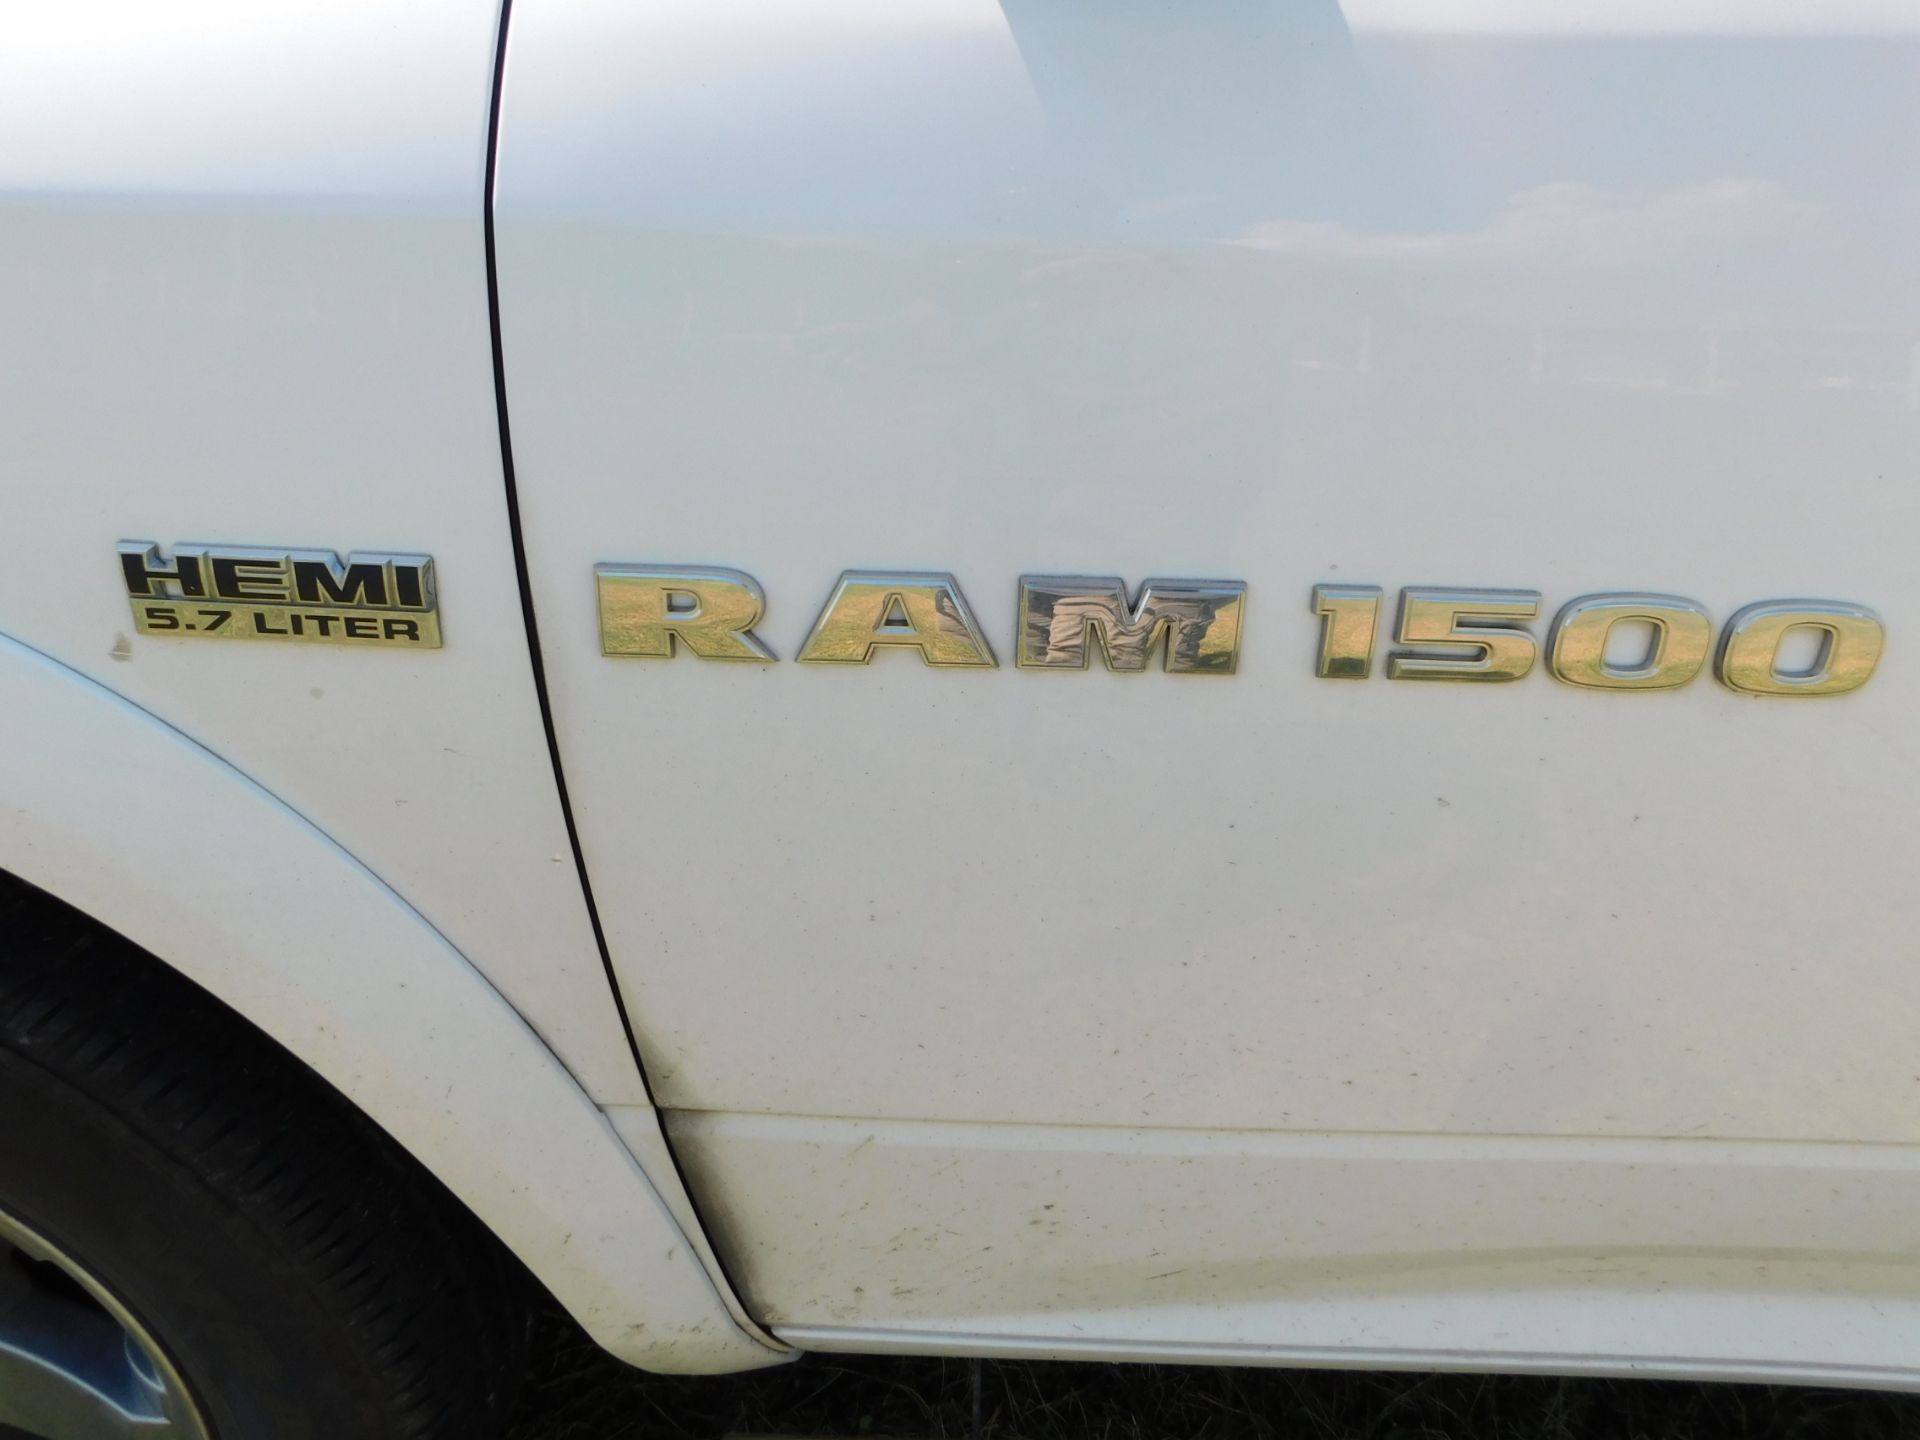 2012 Dodge Ram 1500 Pickup, Crew Cab, 6' Bed, Automatic, 4 WD, AM/FM,AC, PL, PW, Hemi 5.7 L - Image 11 of 53